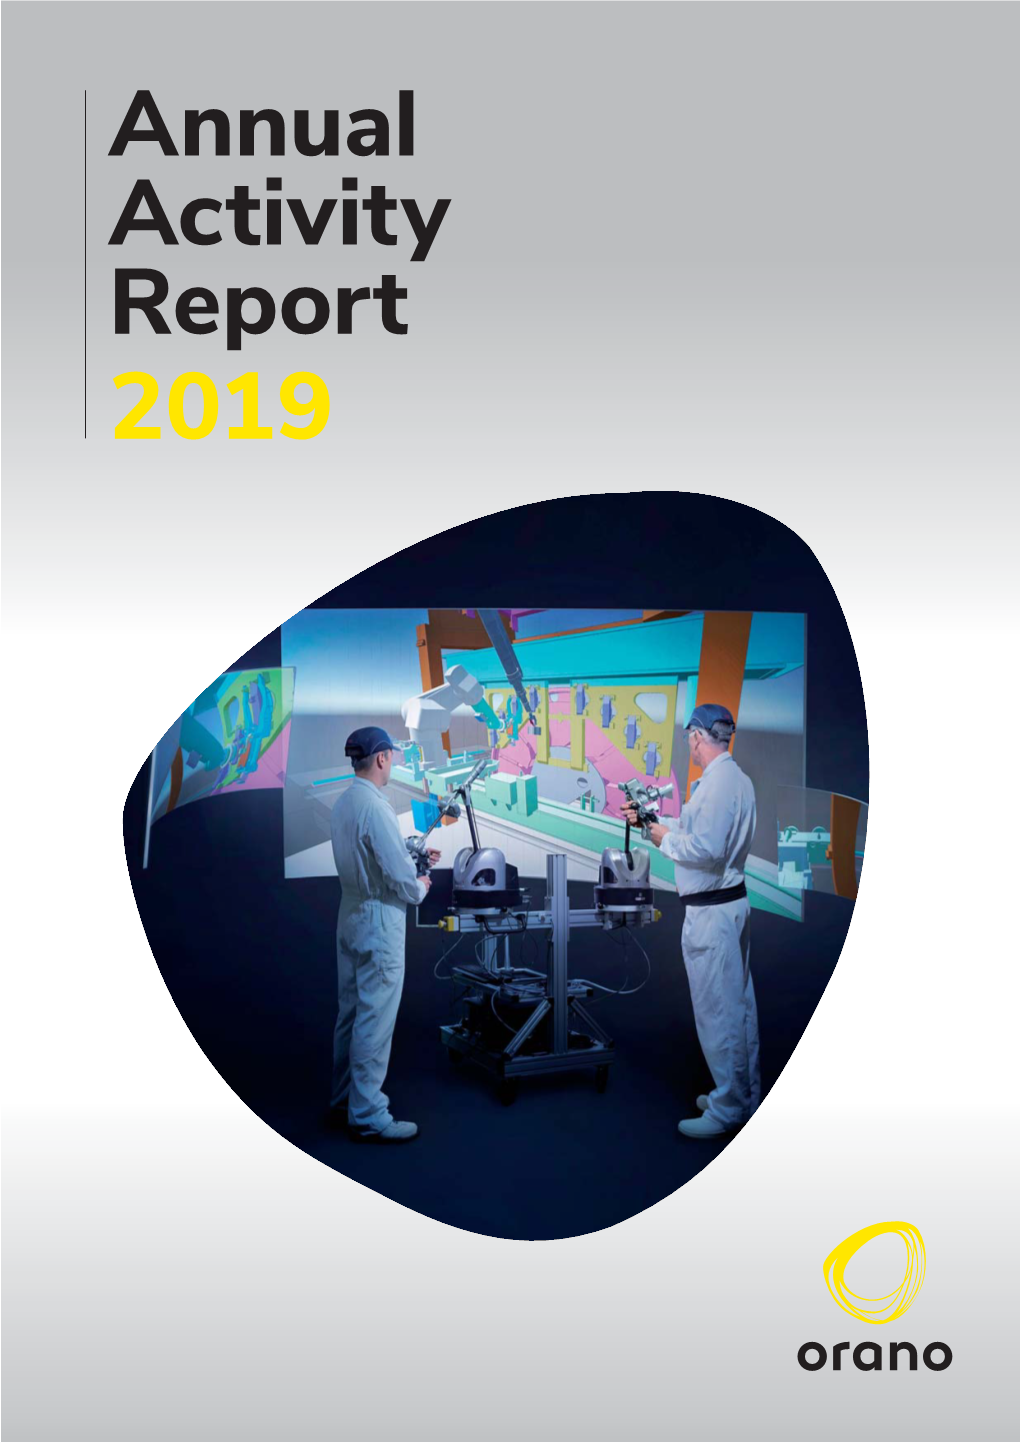 Annual Activity Report 2019 Summary